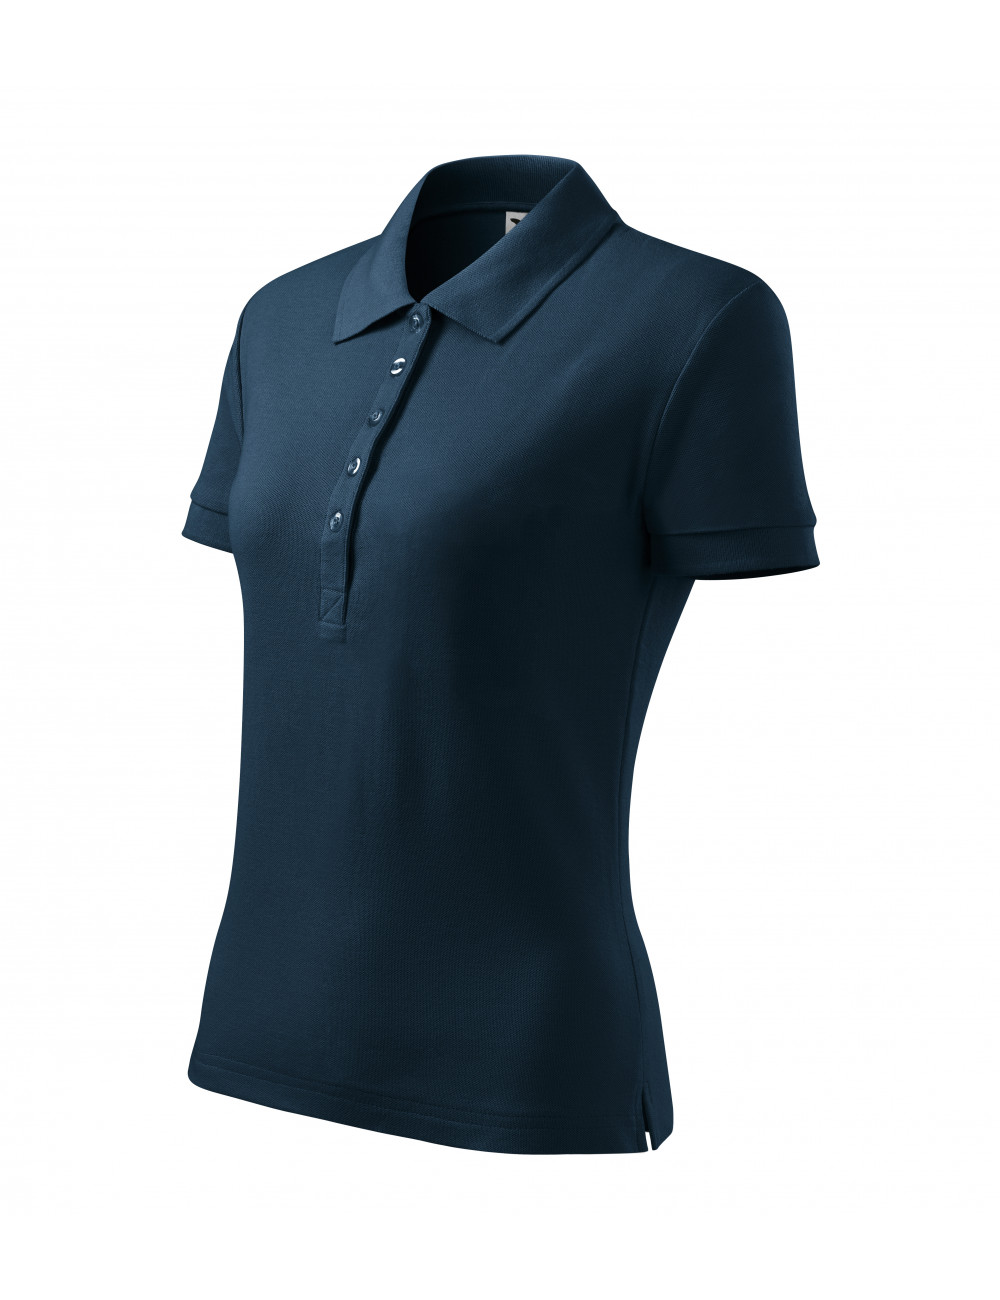 Ladies polo shirt cotton heavy 216 navy blue Adler Malfini